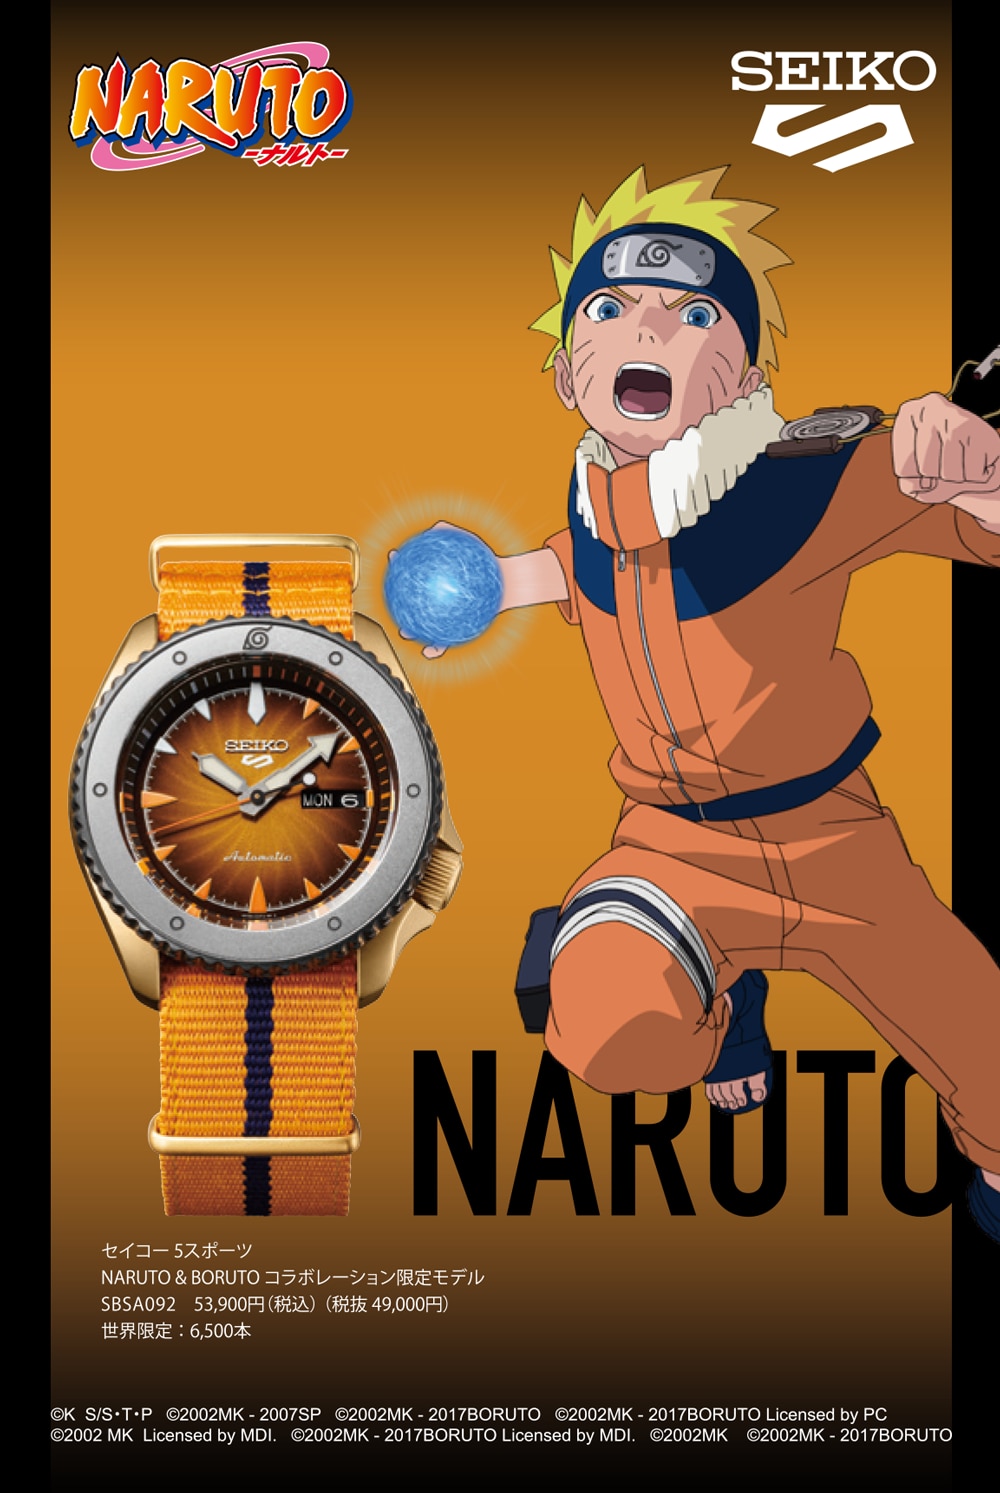 Sbsa092 ナルト Naruto ナルト Boruto ボルト セイコー5スポーツ コラボレーション限定モデル 時計専門店ザ クロックハウス